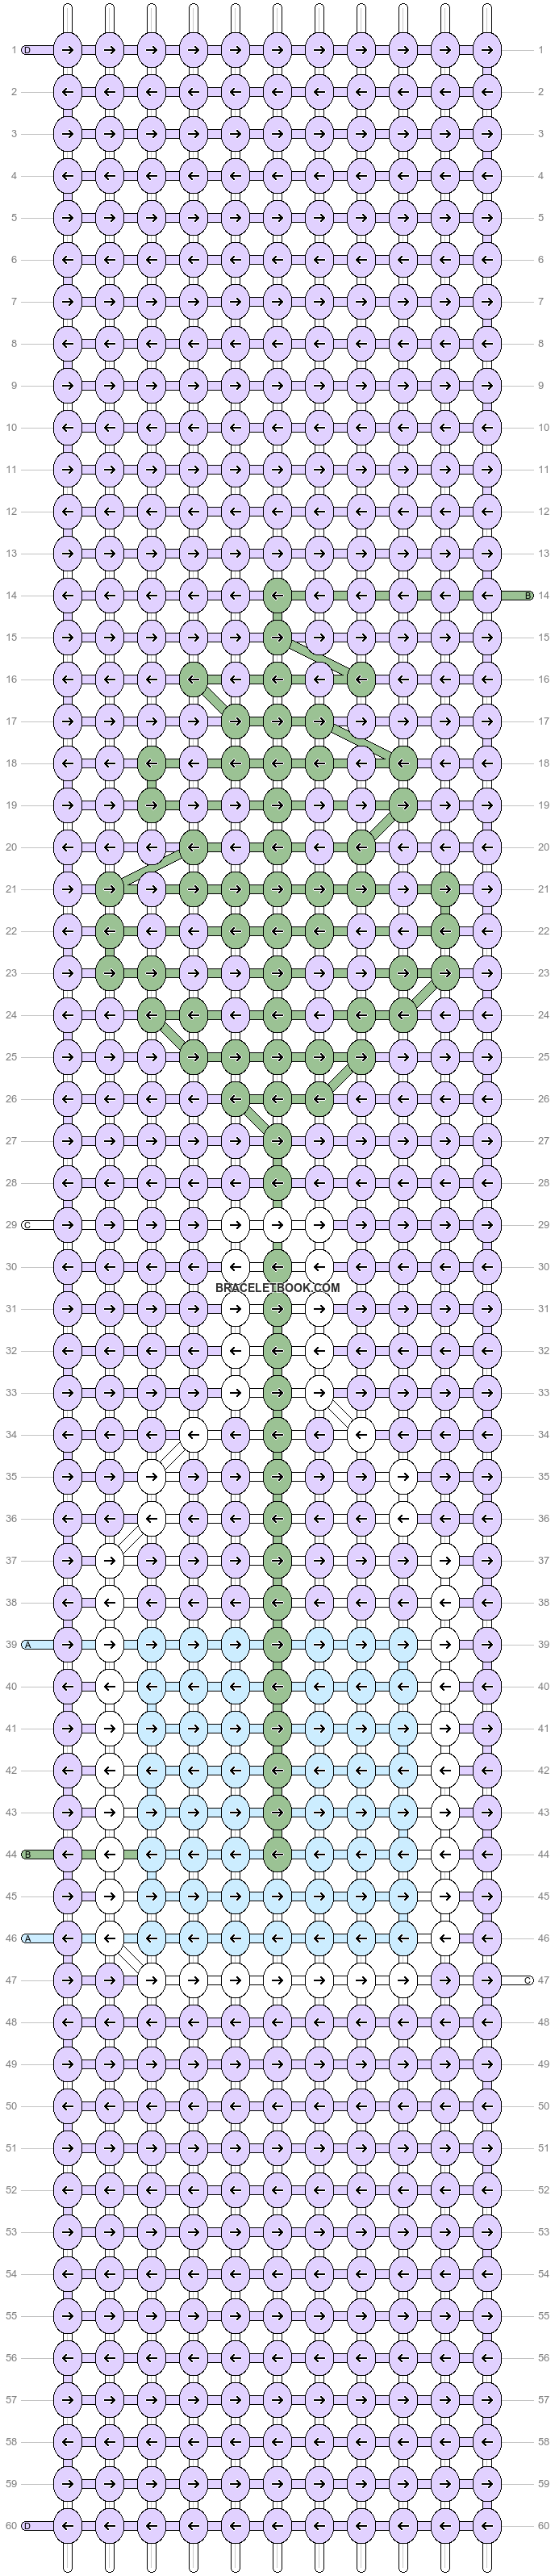 Alpha pattern #38260 variation #55896 pattern